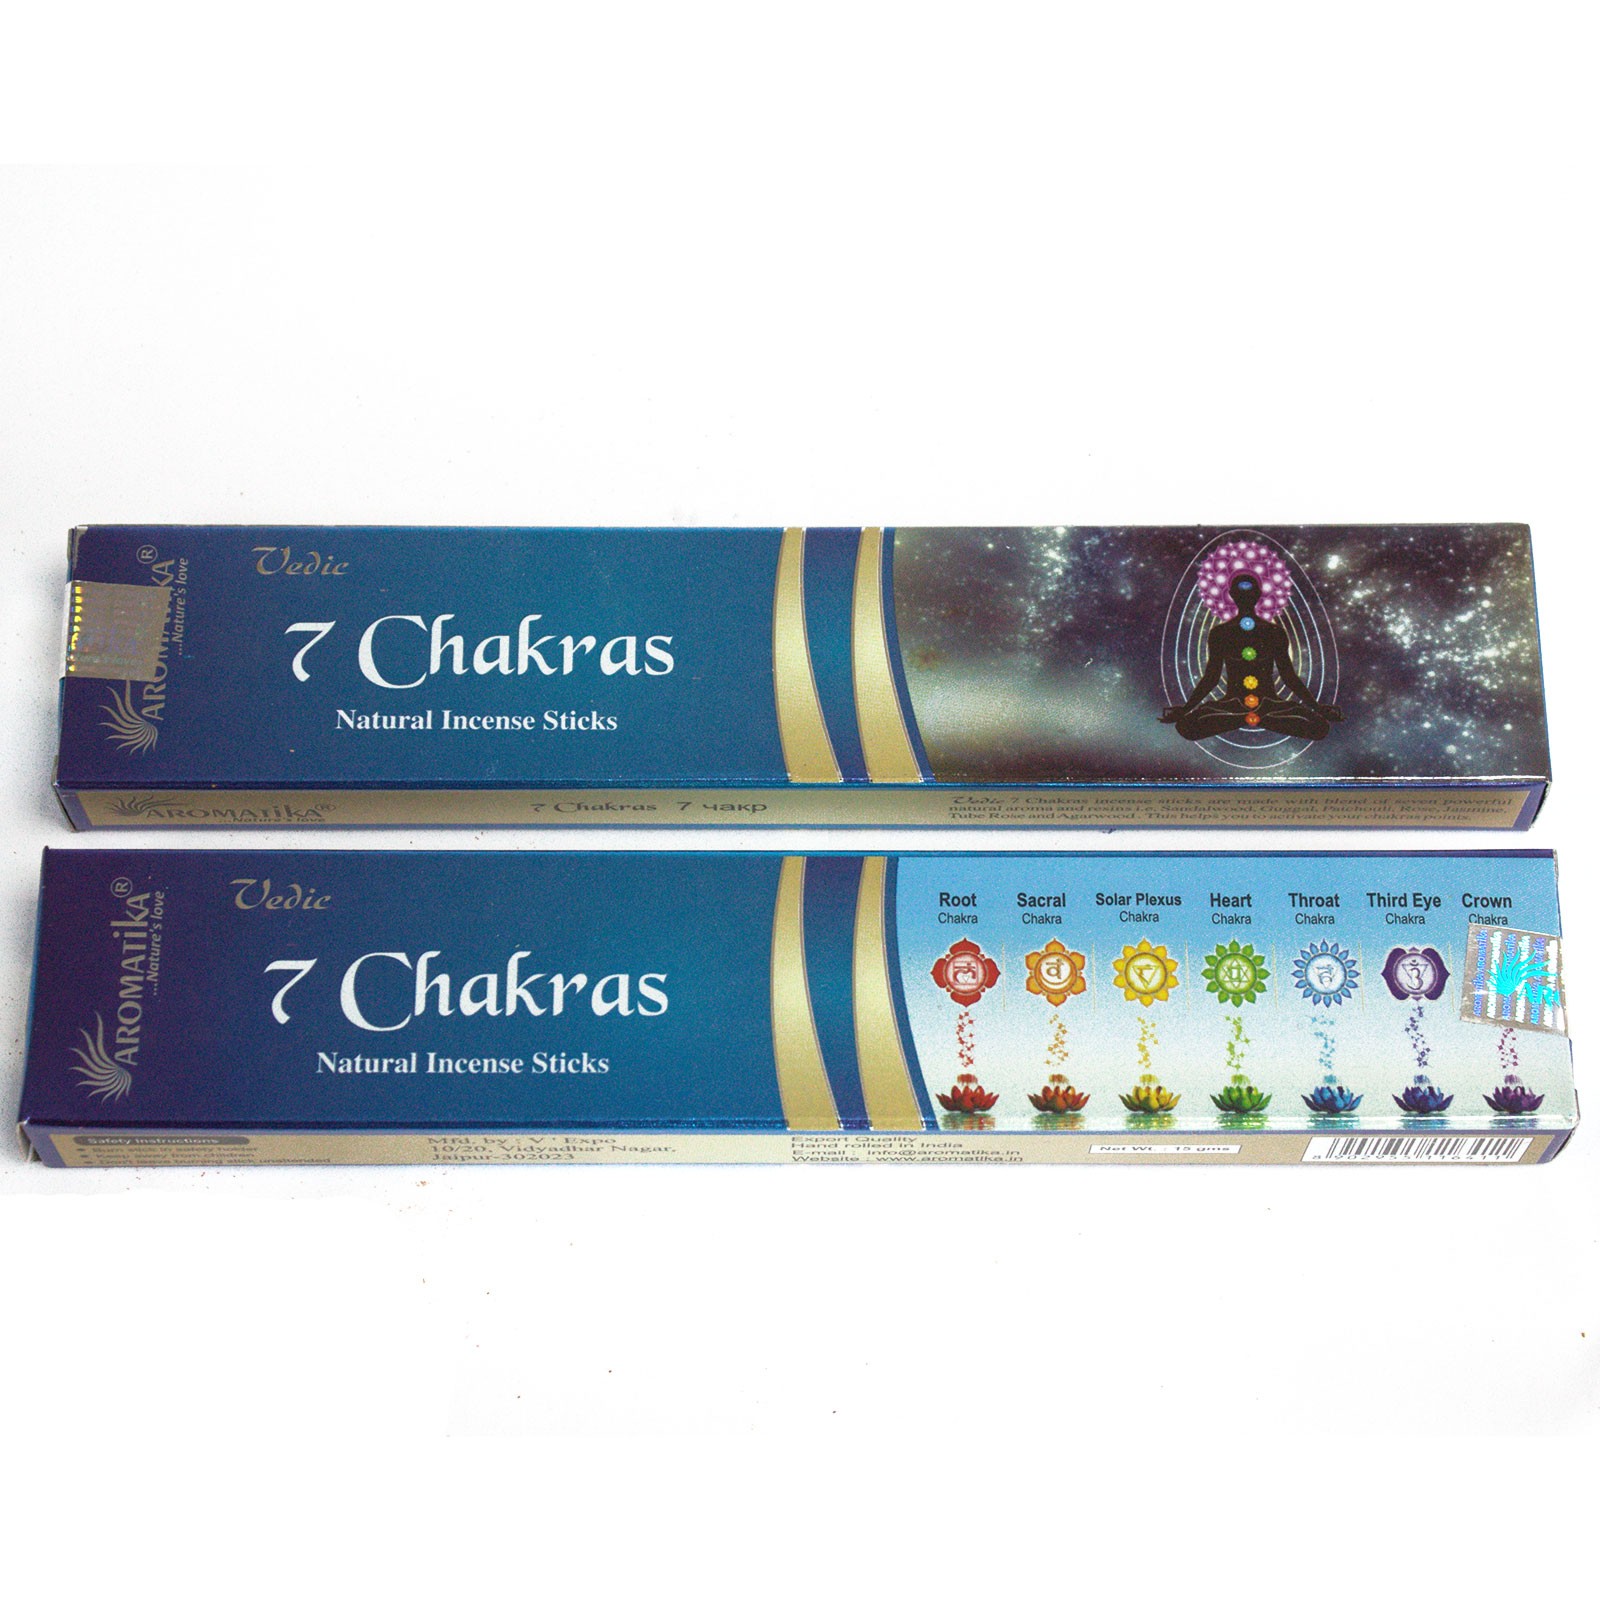 5 x Packs Vedic Incense Sticks - 7 Chakras